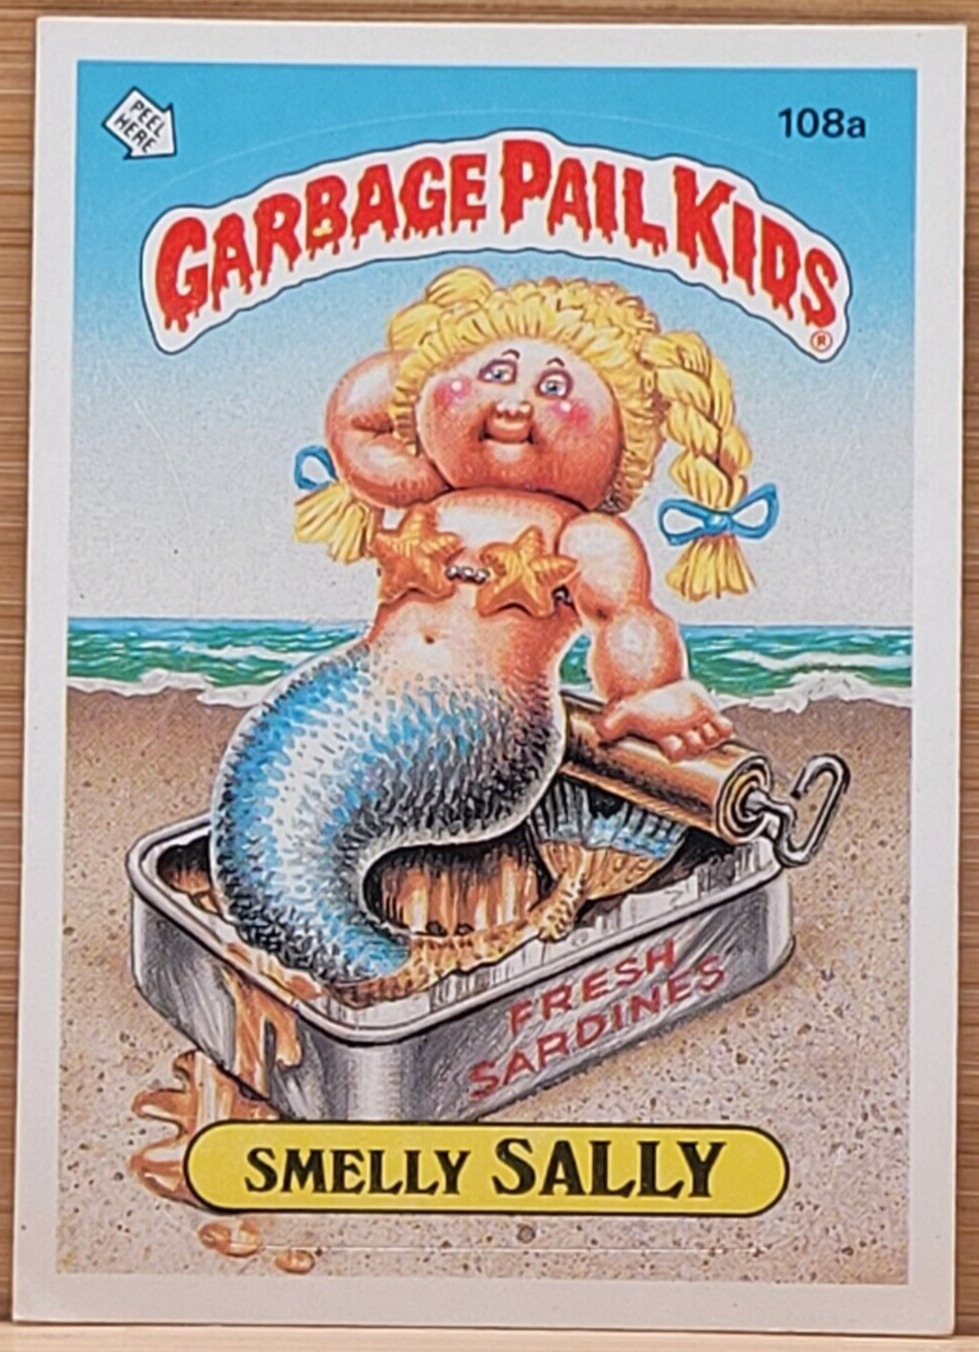 1986 TOPPS GARBAGE PAIL KIDS  SMELLY SALLY WHITE SPLOTCH ERROR CARD SERIES 3